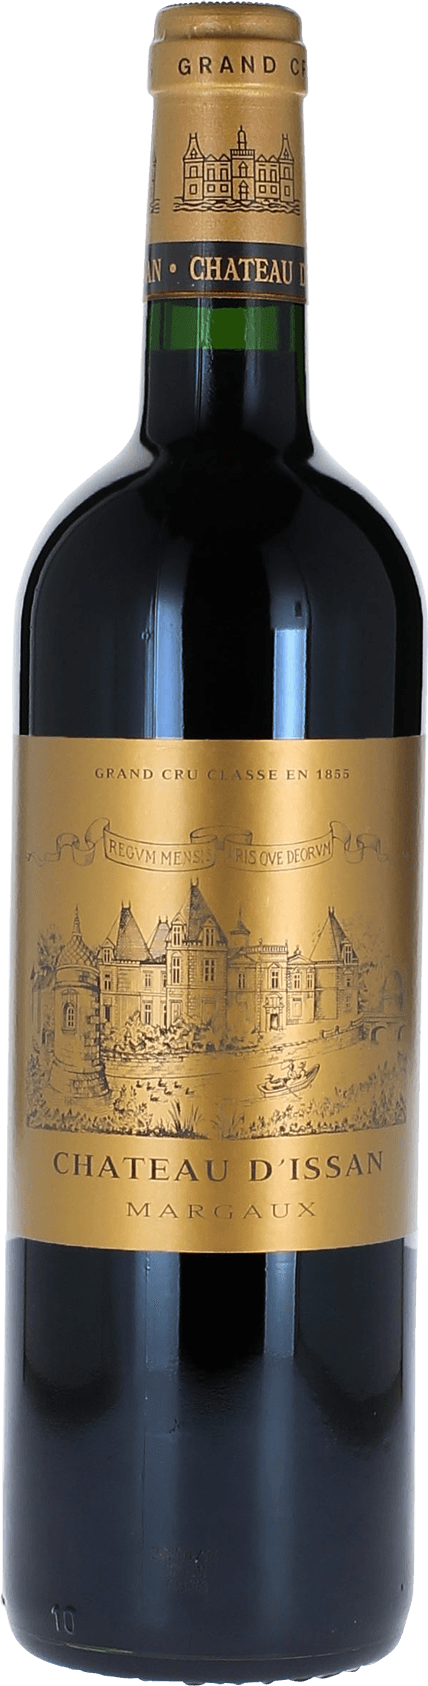 Issan 2016 3me Grand cru class Margaux, Bordeaux rouge